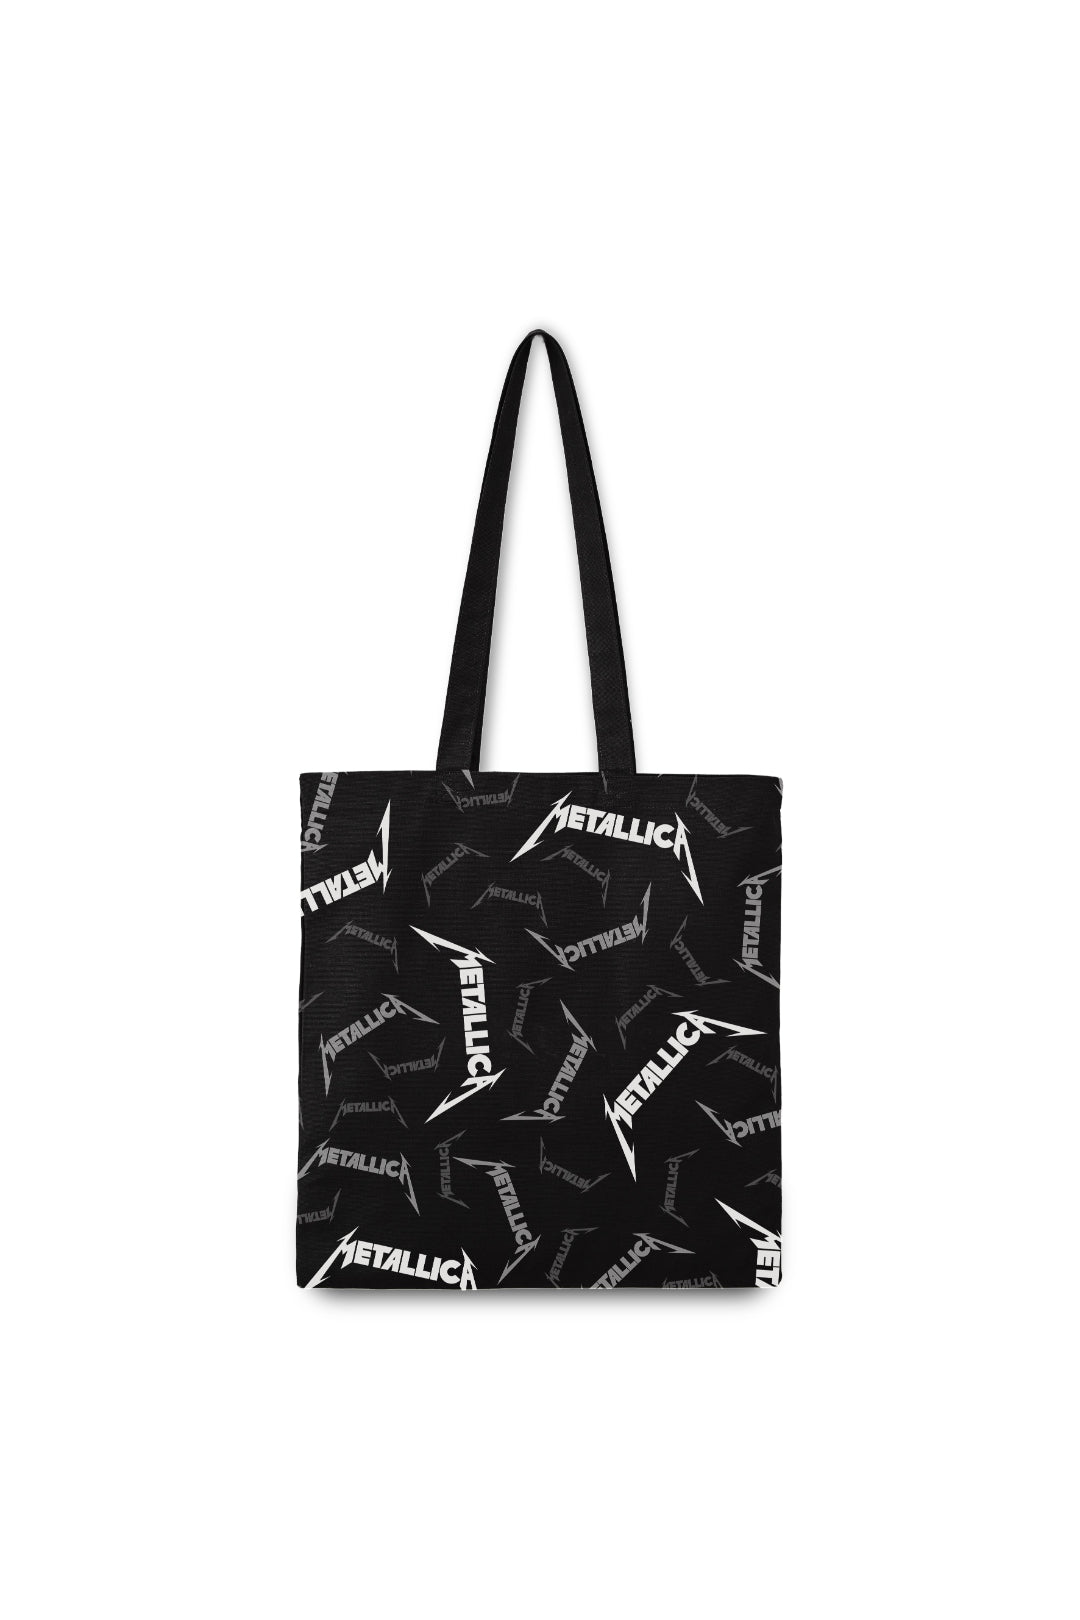 Rocksax Metallica Tote Bag - Fade To Black